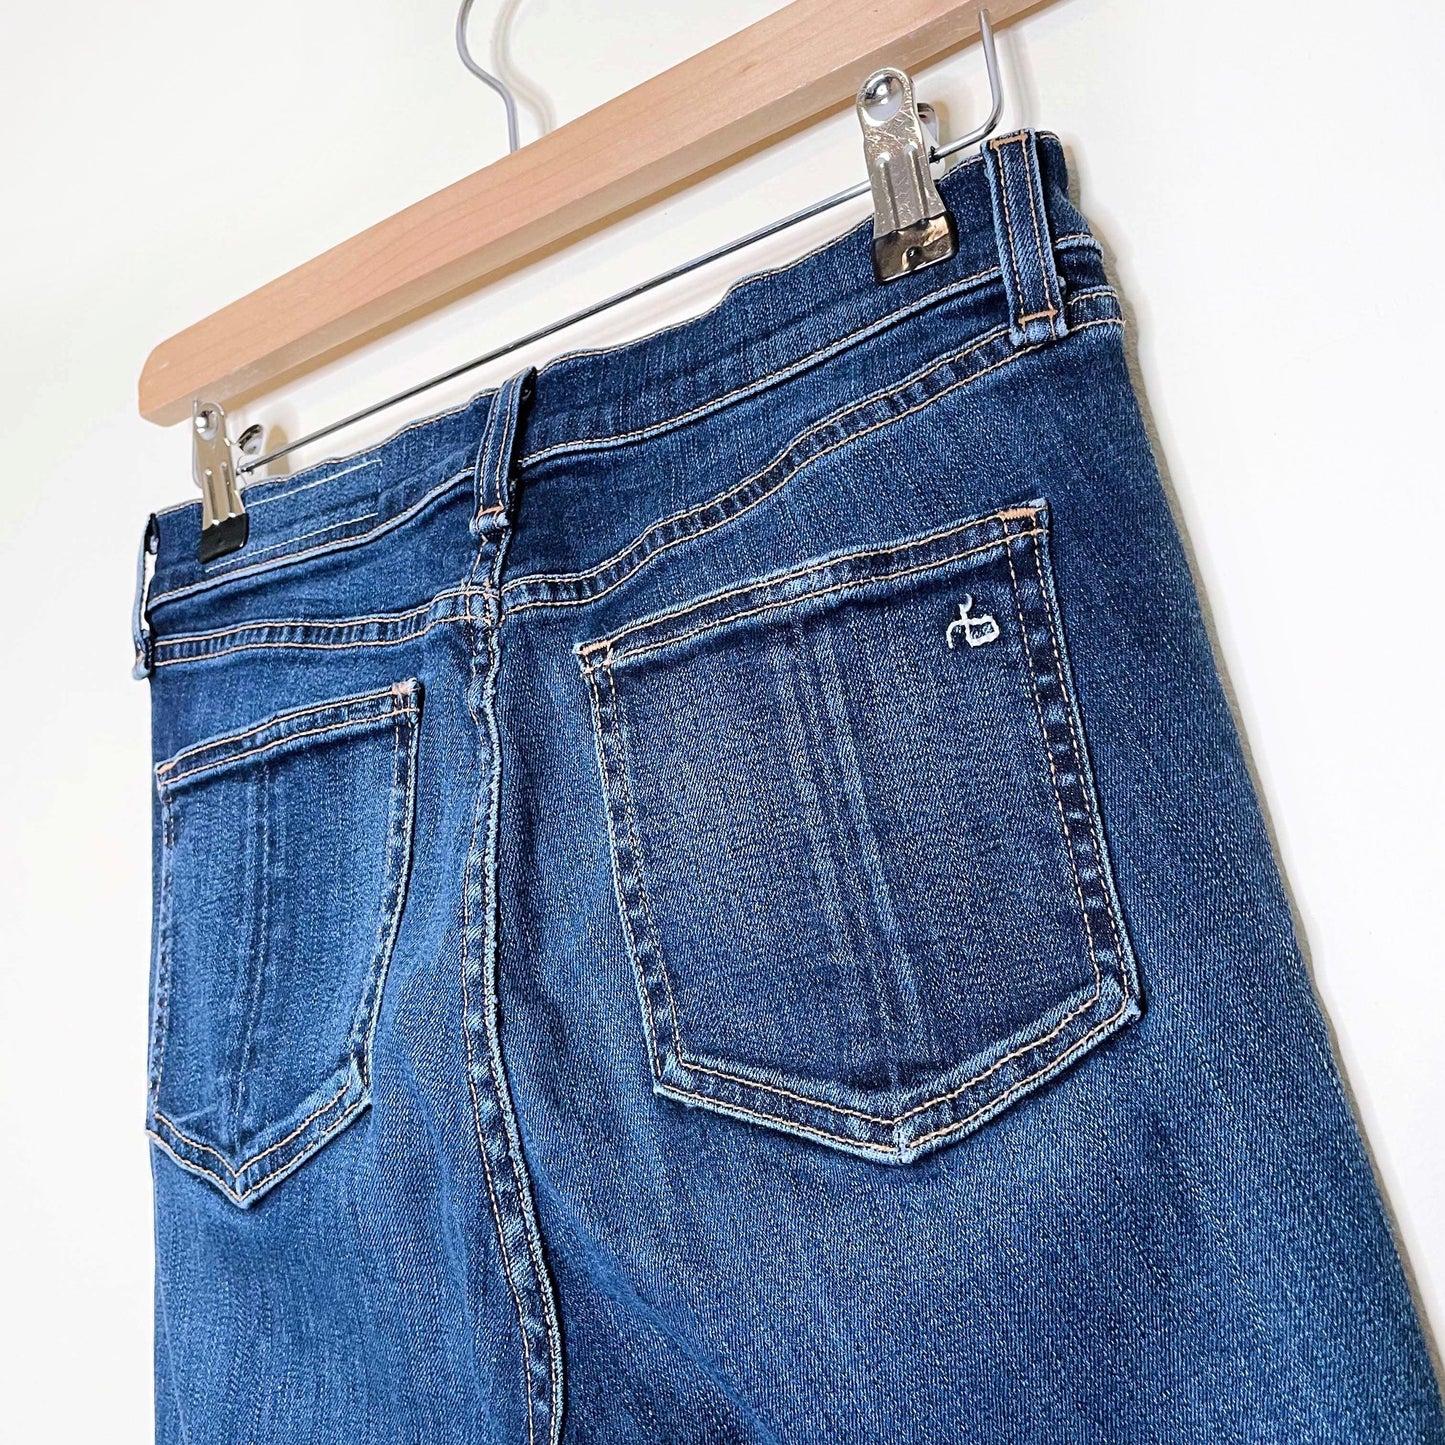 rag & bone 10" capri jeans in stanwix - size 27